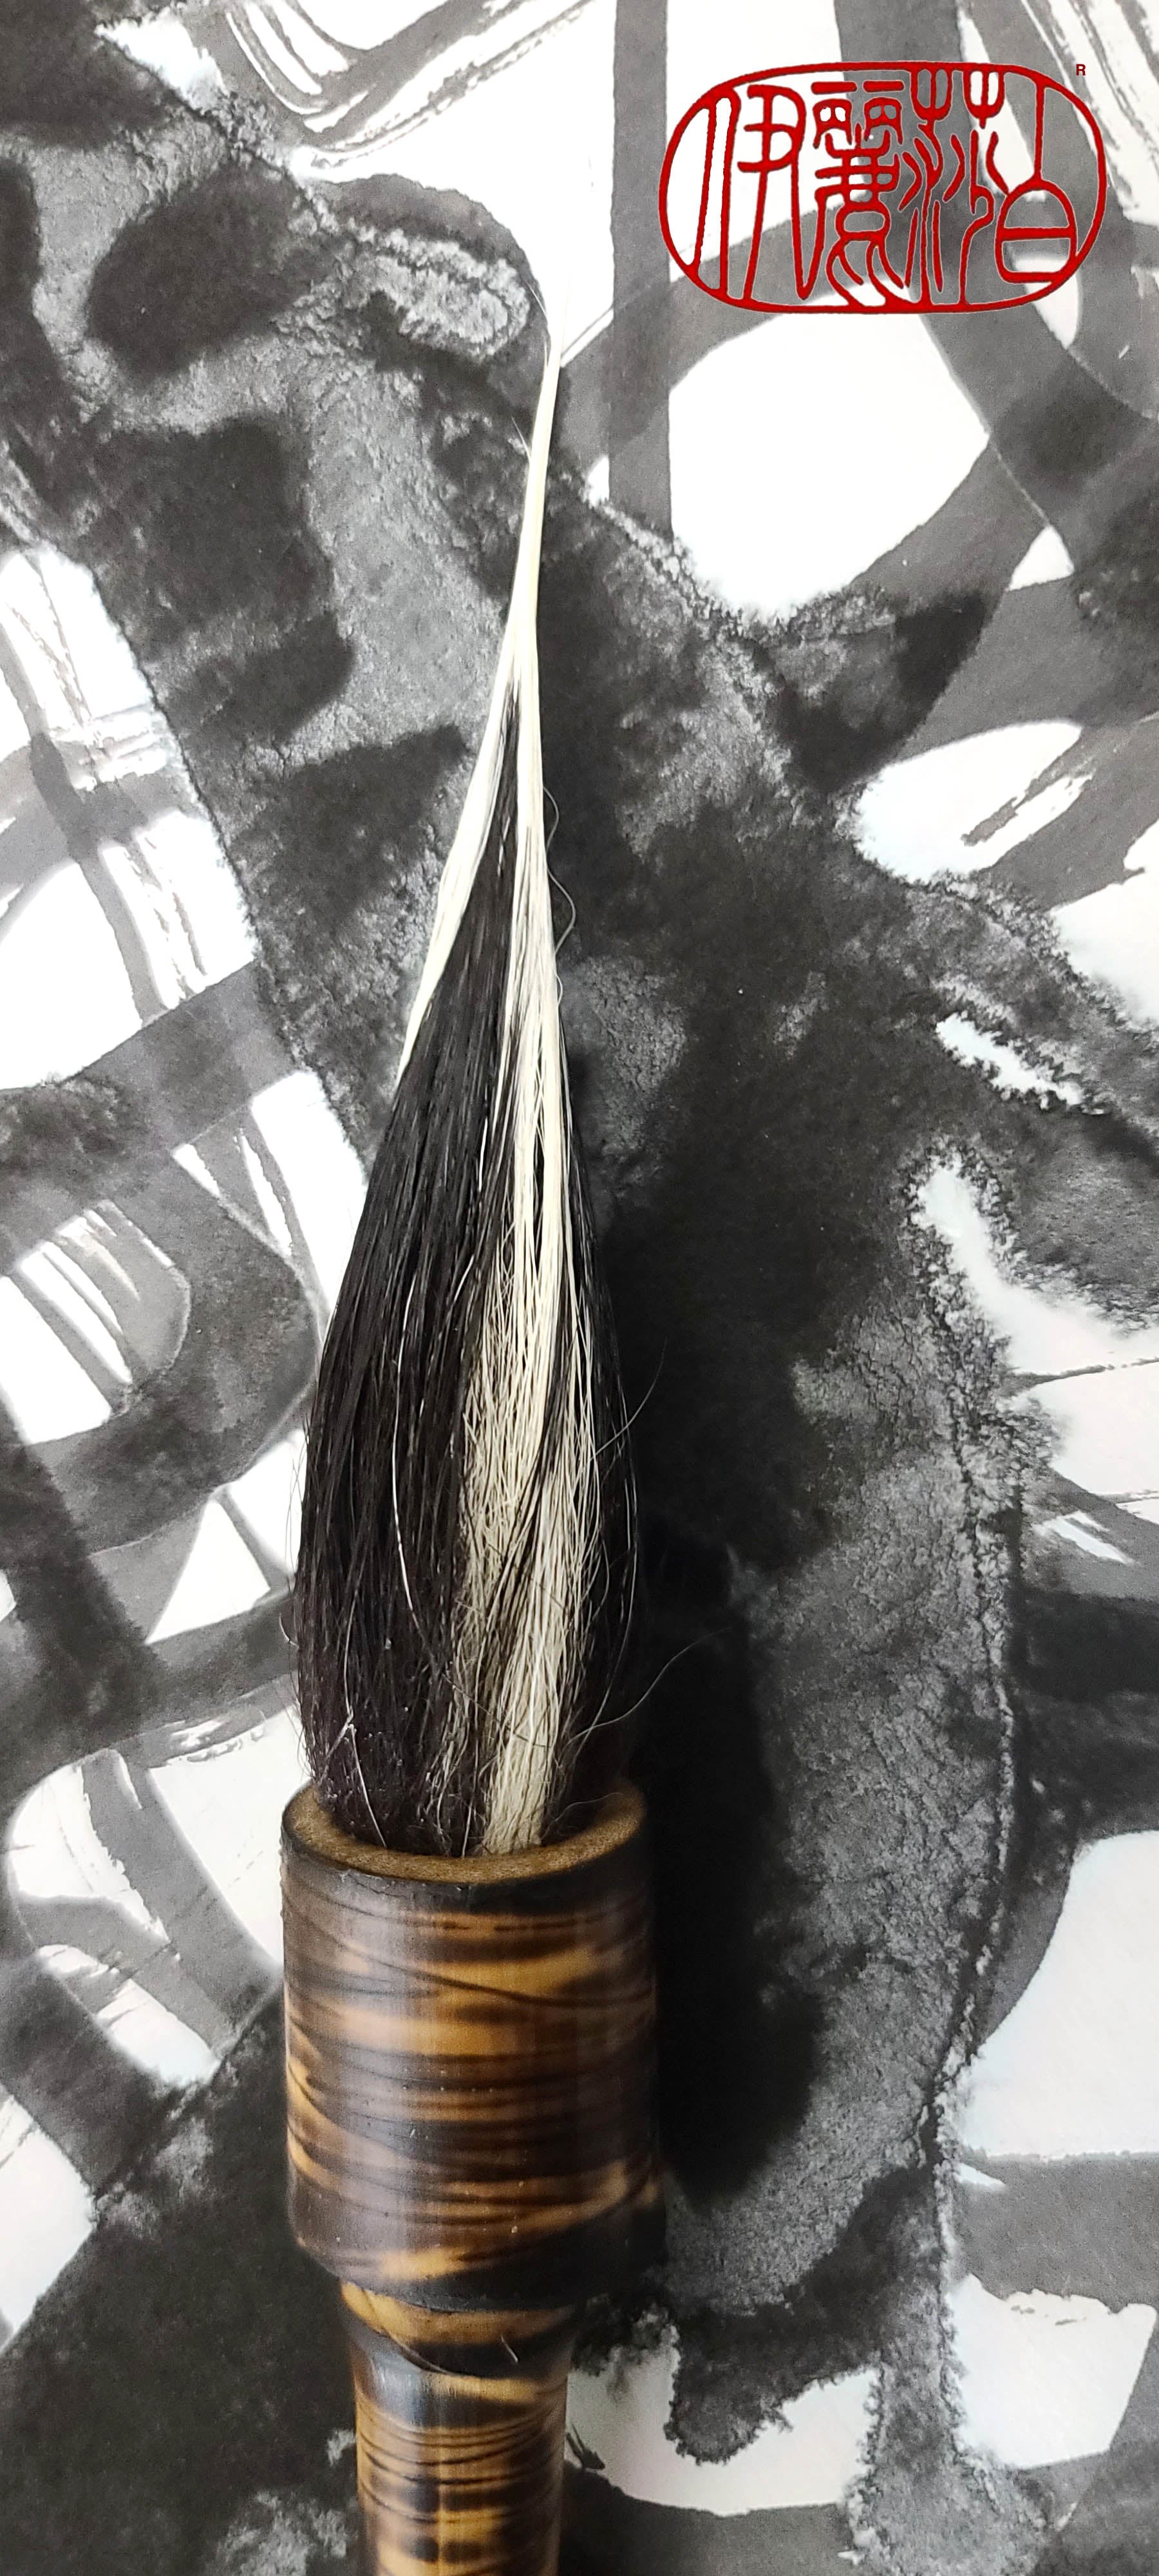 Natural Skunk Paintbrush With Bamboo Handle SB308 Paintbrush Elizabeth Schowachert Art